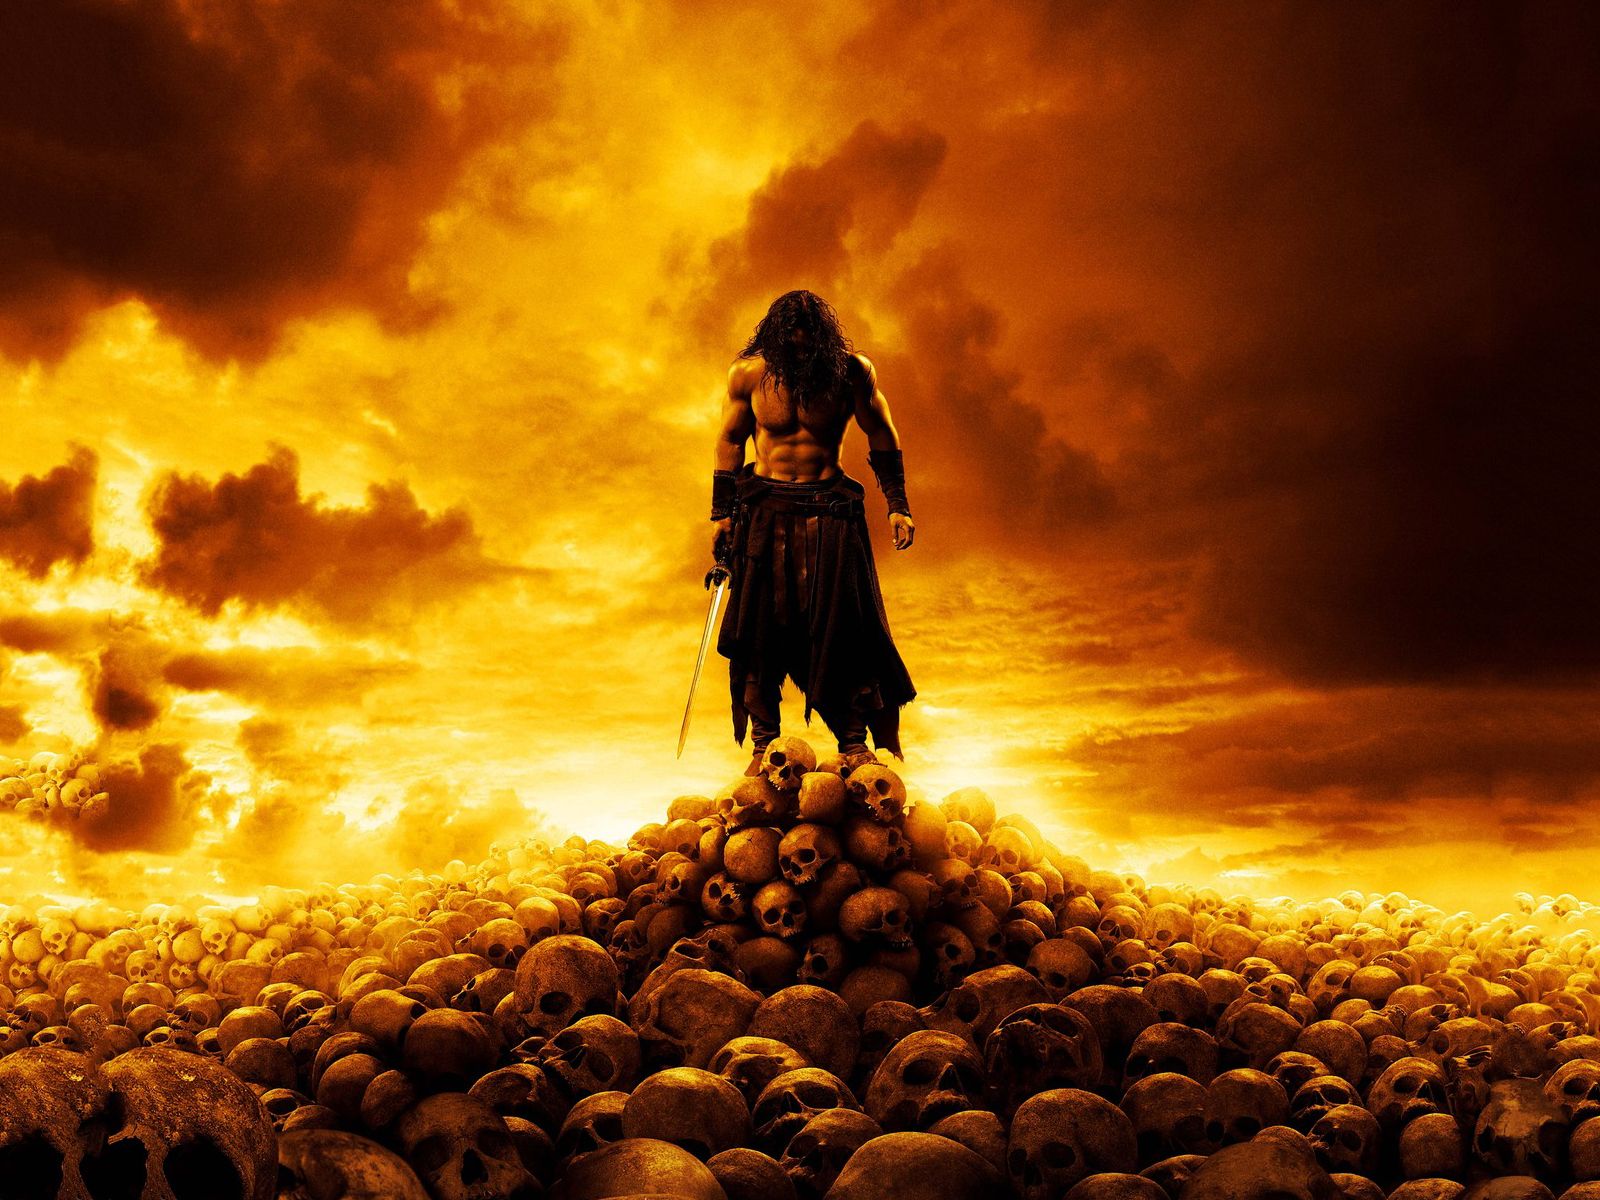 Conan The Barbarian recent movie VS King Leonidas from 300